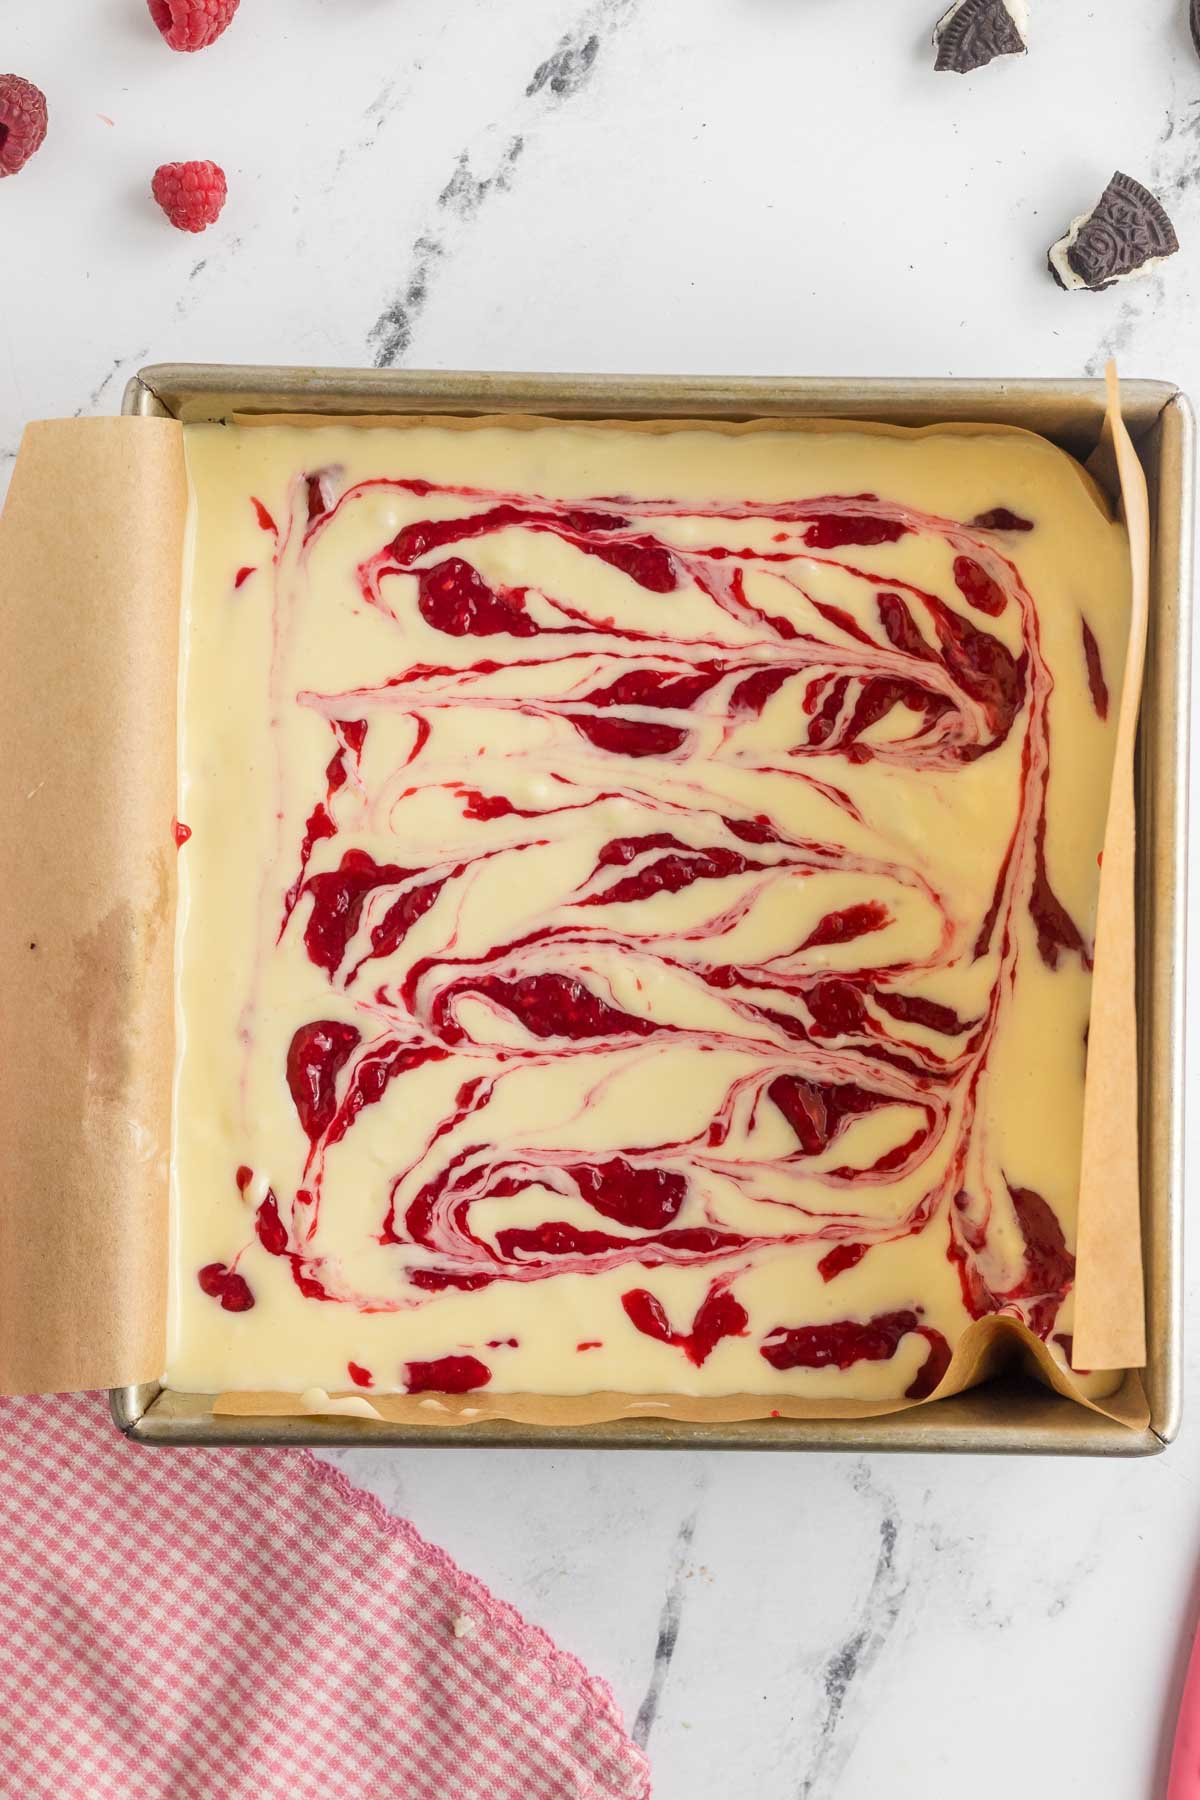 berry puree swirled throughout cheesecake squares